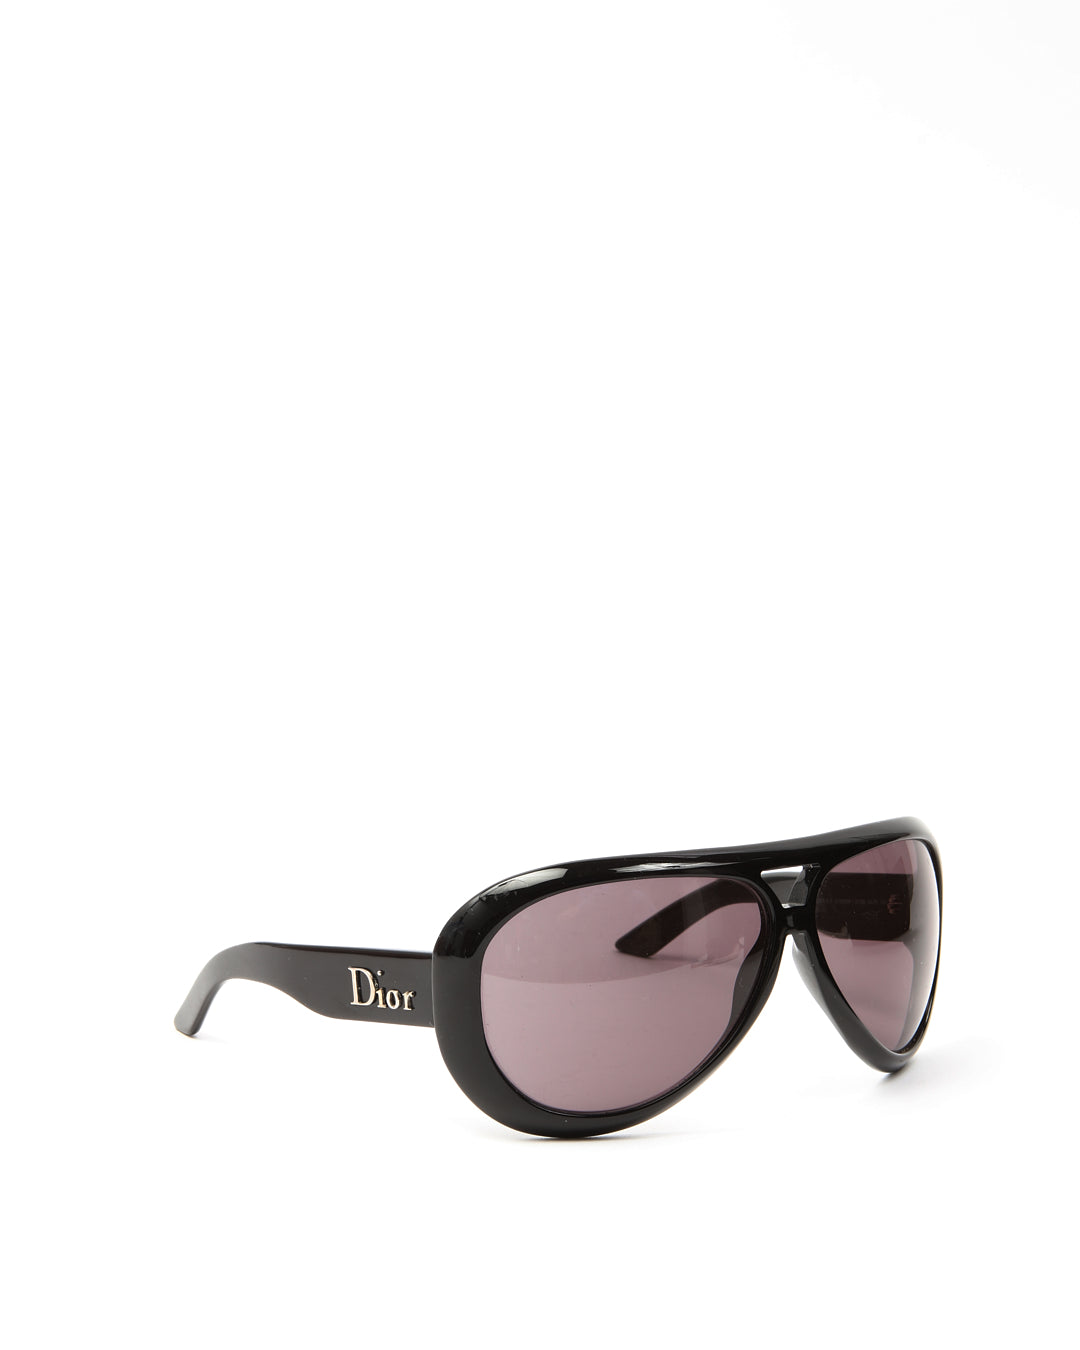 Dior Black AVIADIOR1 Sunglasses